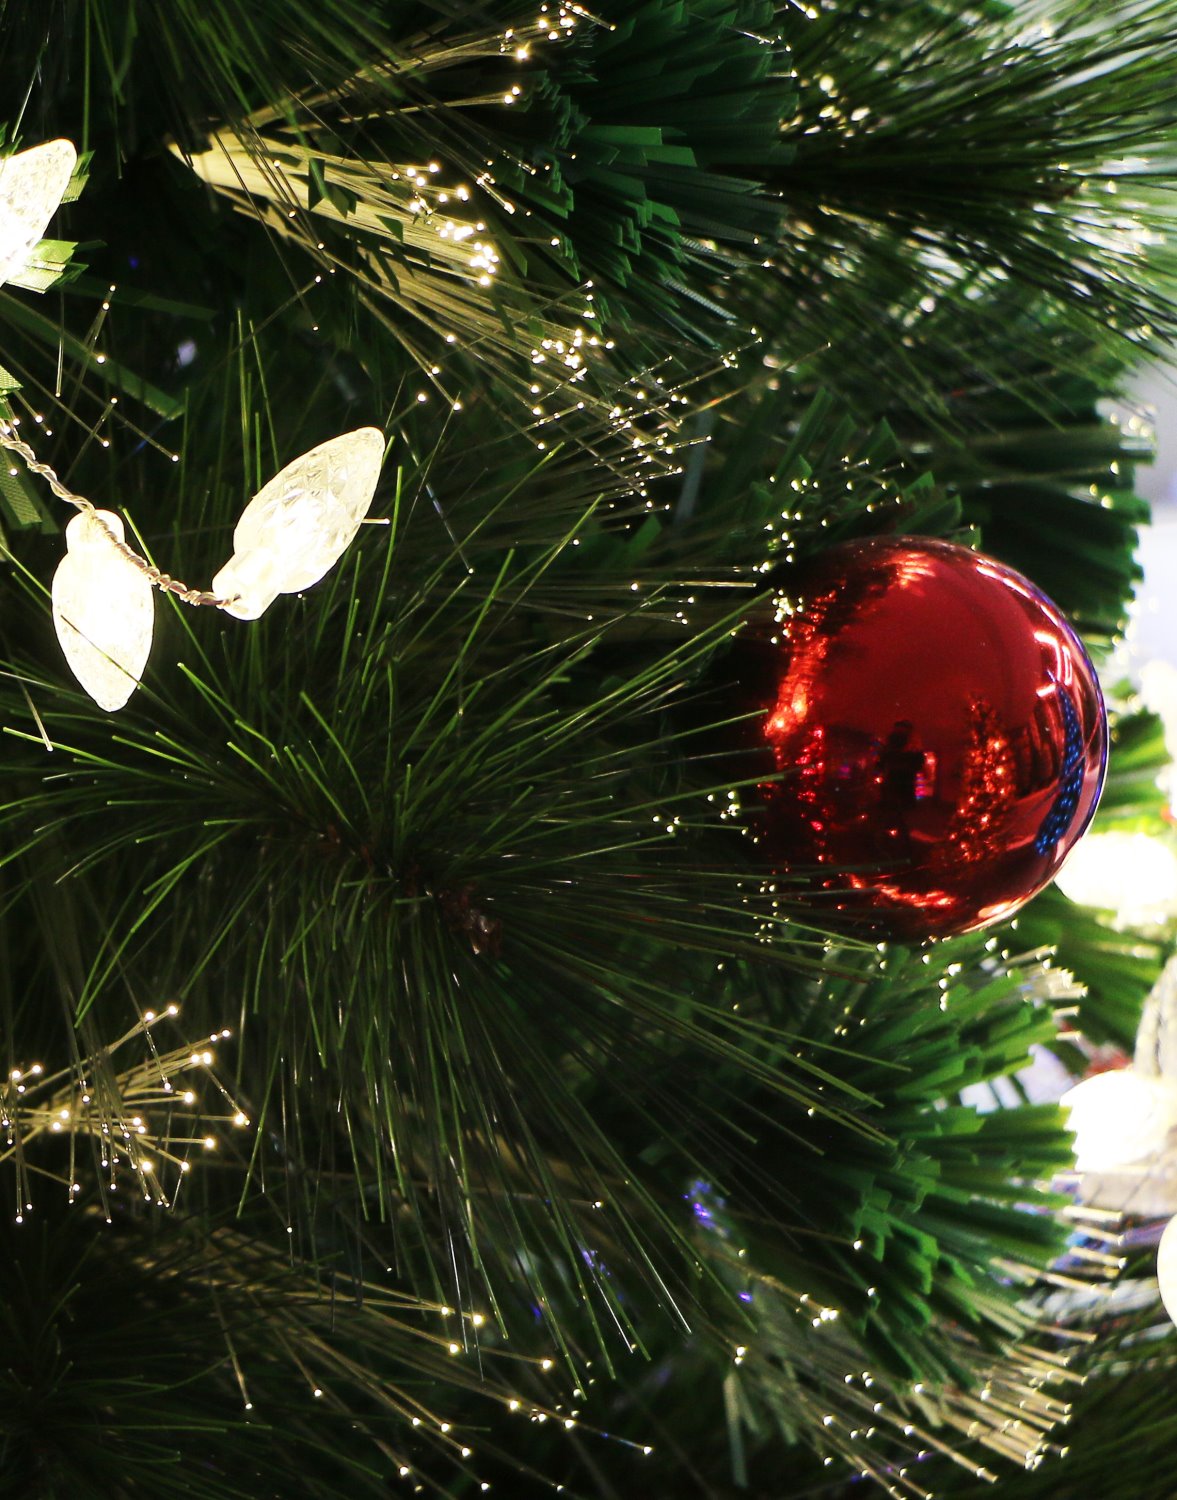 Oren 6ft Decorated Holiday Festive Fibre Optic Christmas Tree - Warm White